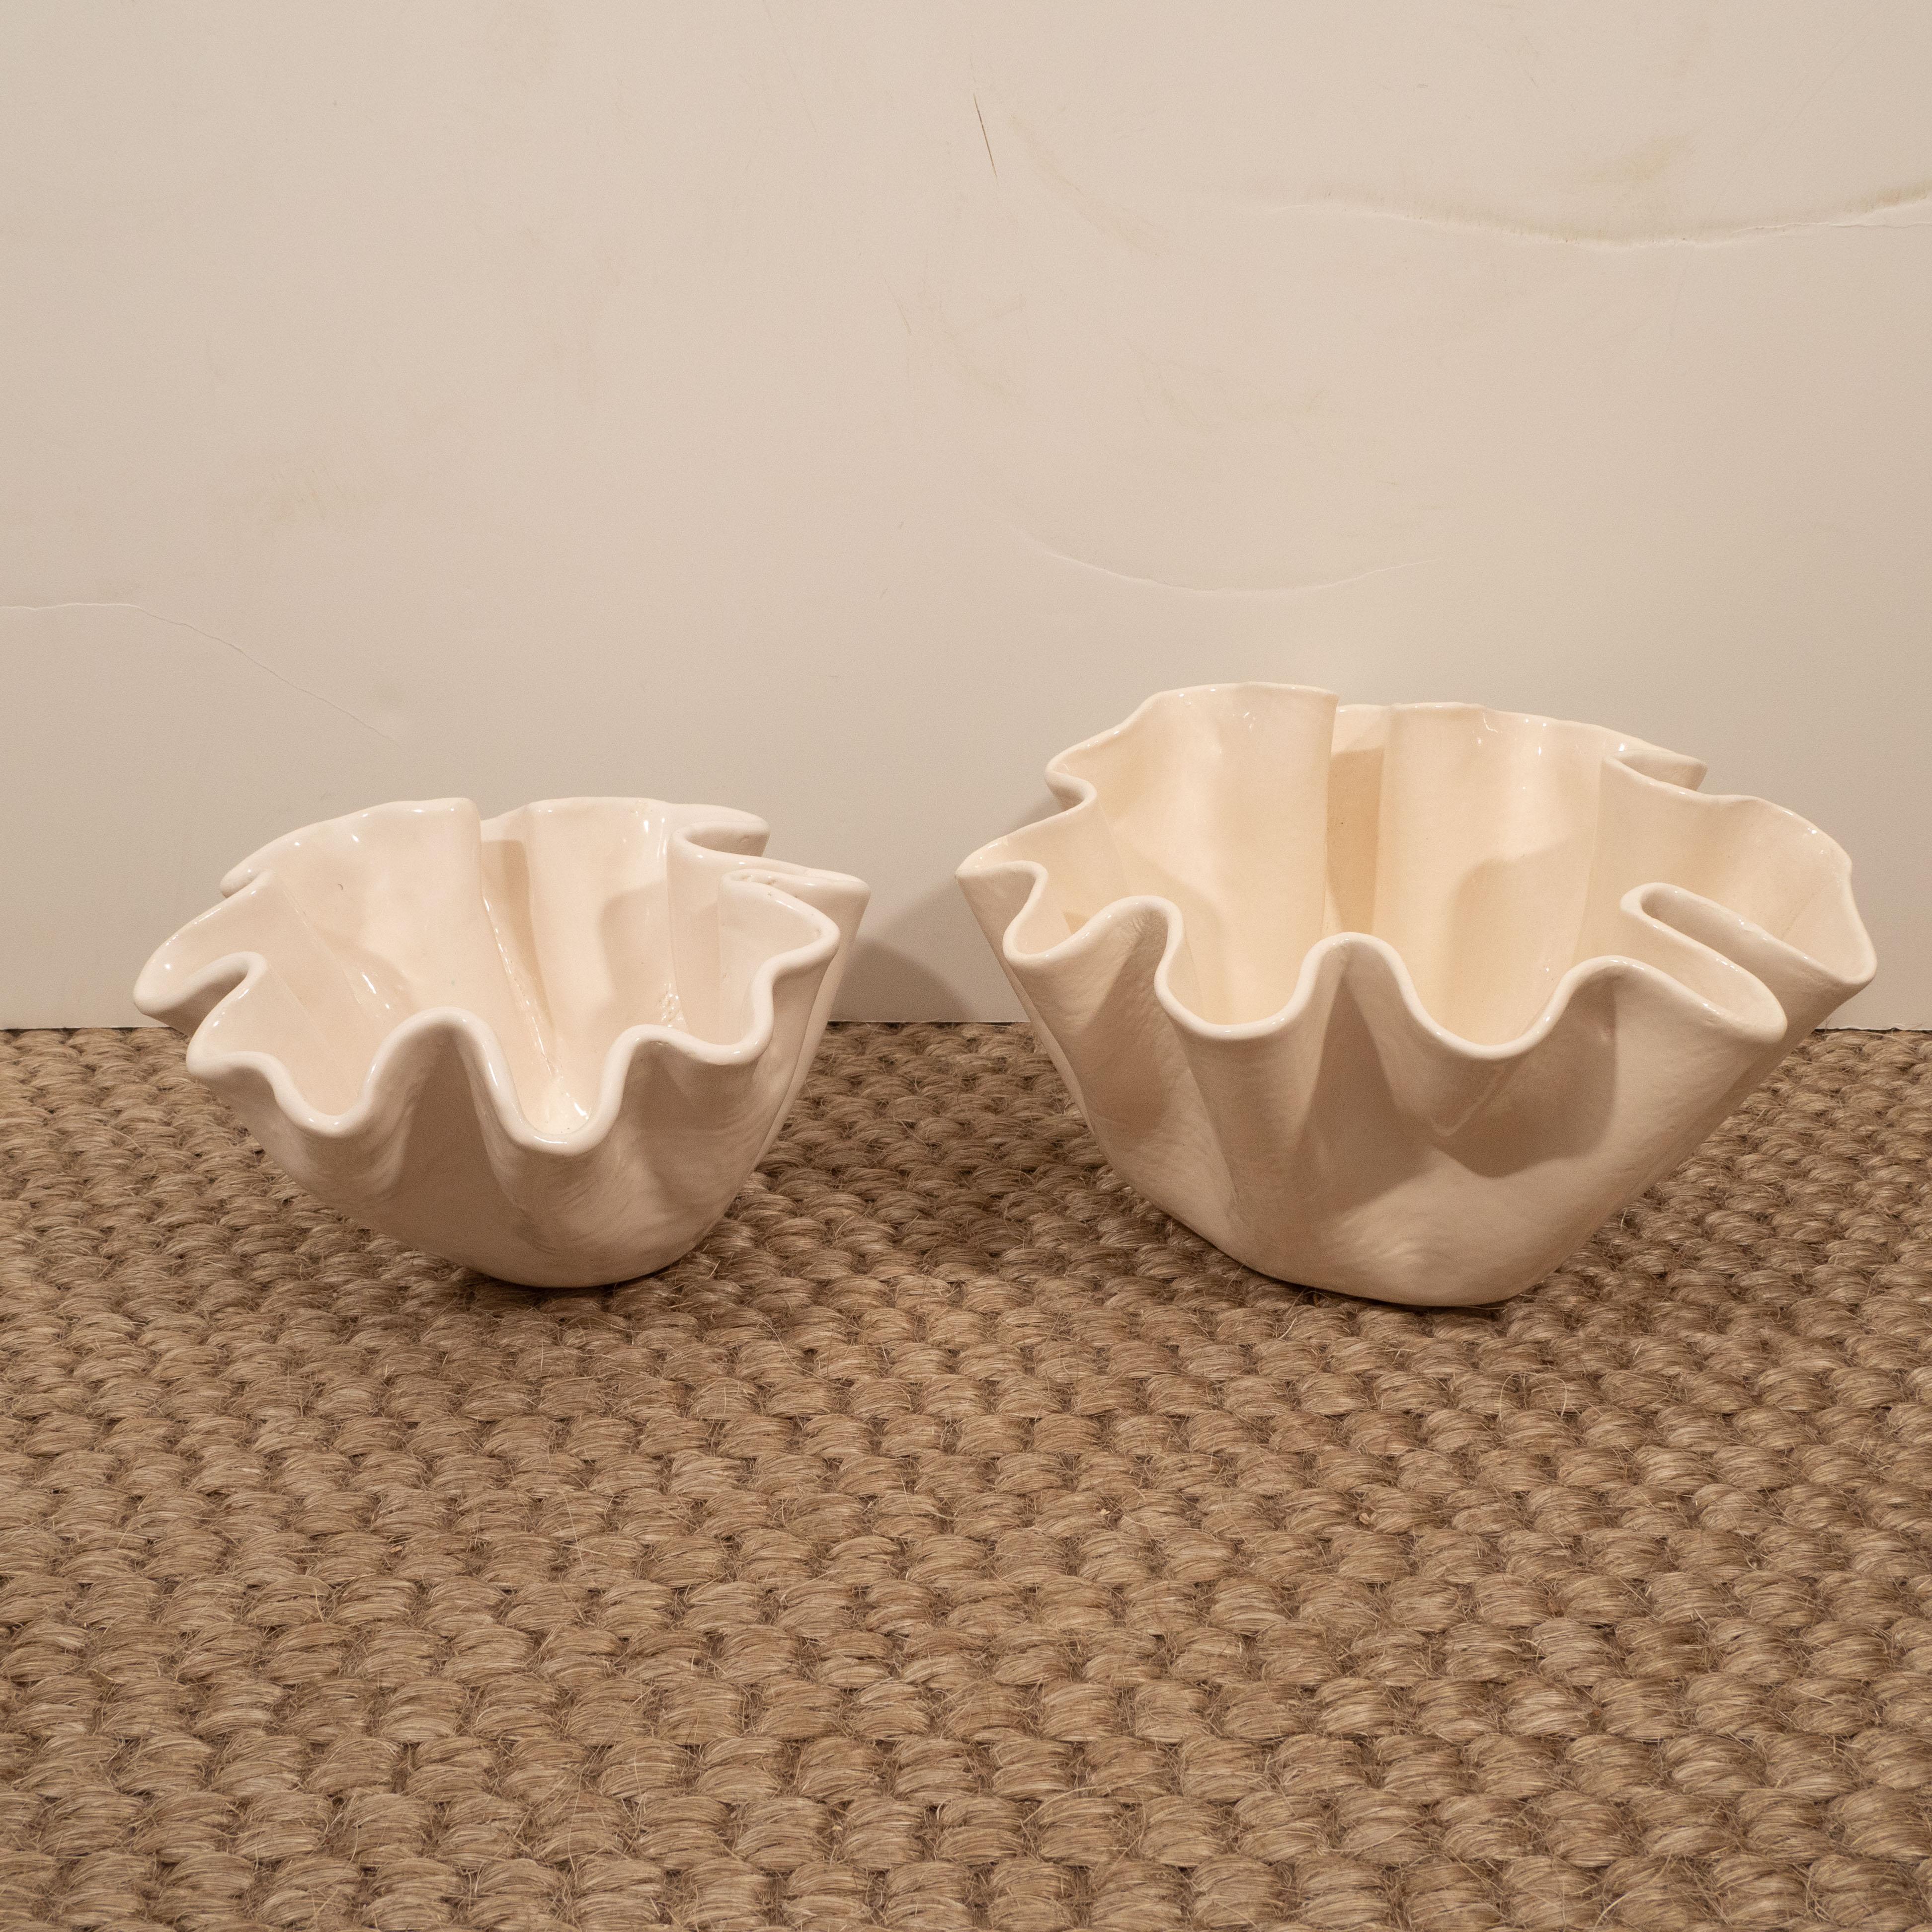 A set of three ceramic 